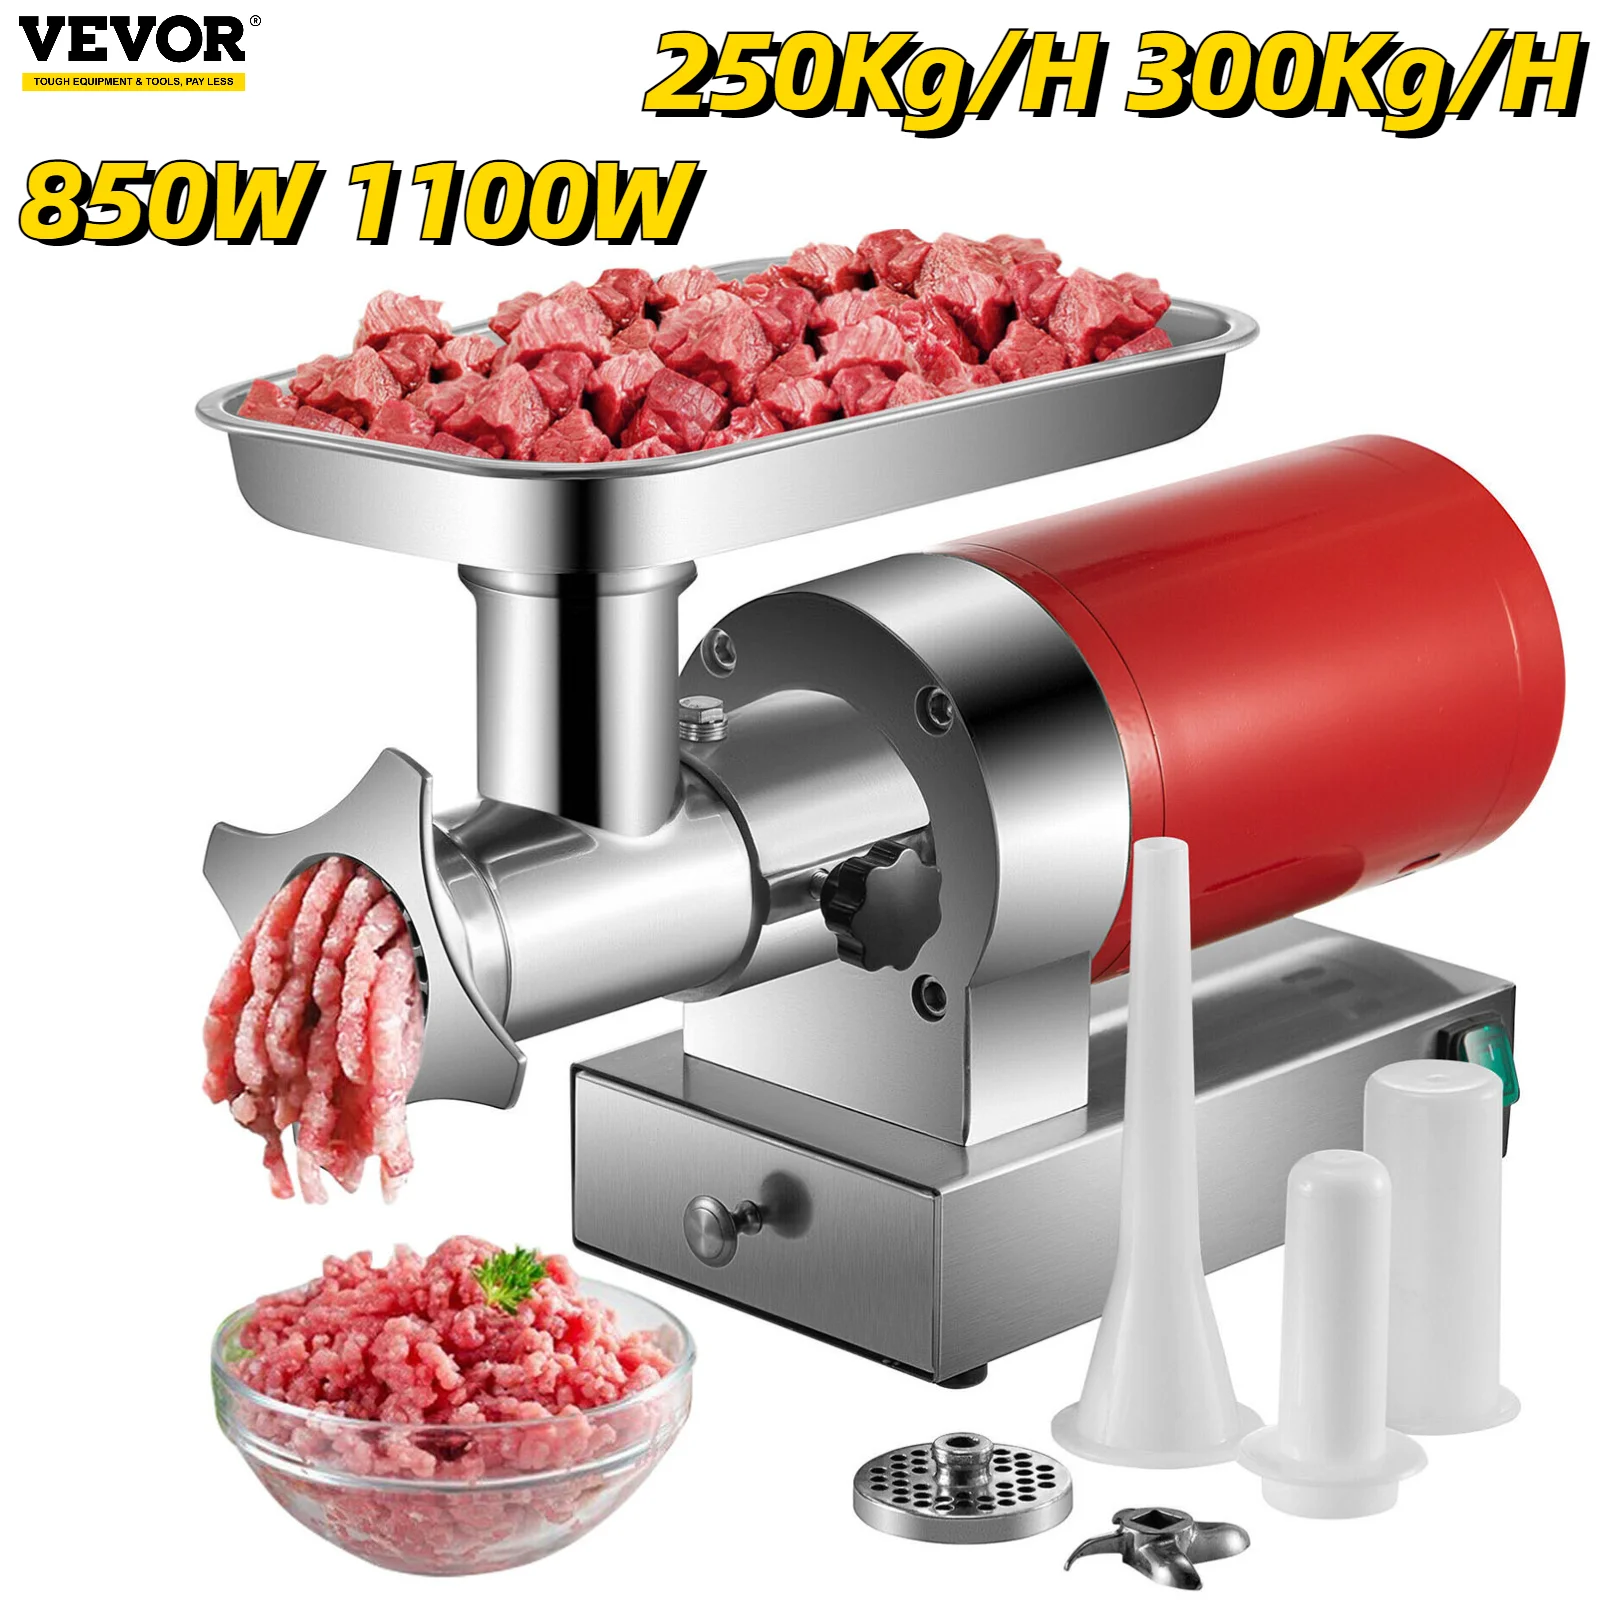 VEVOR Electric Meat Grinder 250Kg/H 300Kg/H W/ Drawers Max Powerful Chopper Shredder Commercial Home Appliance Food Processor